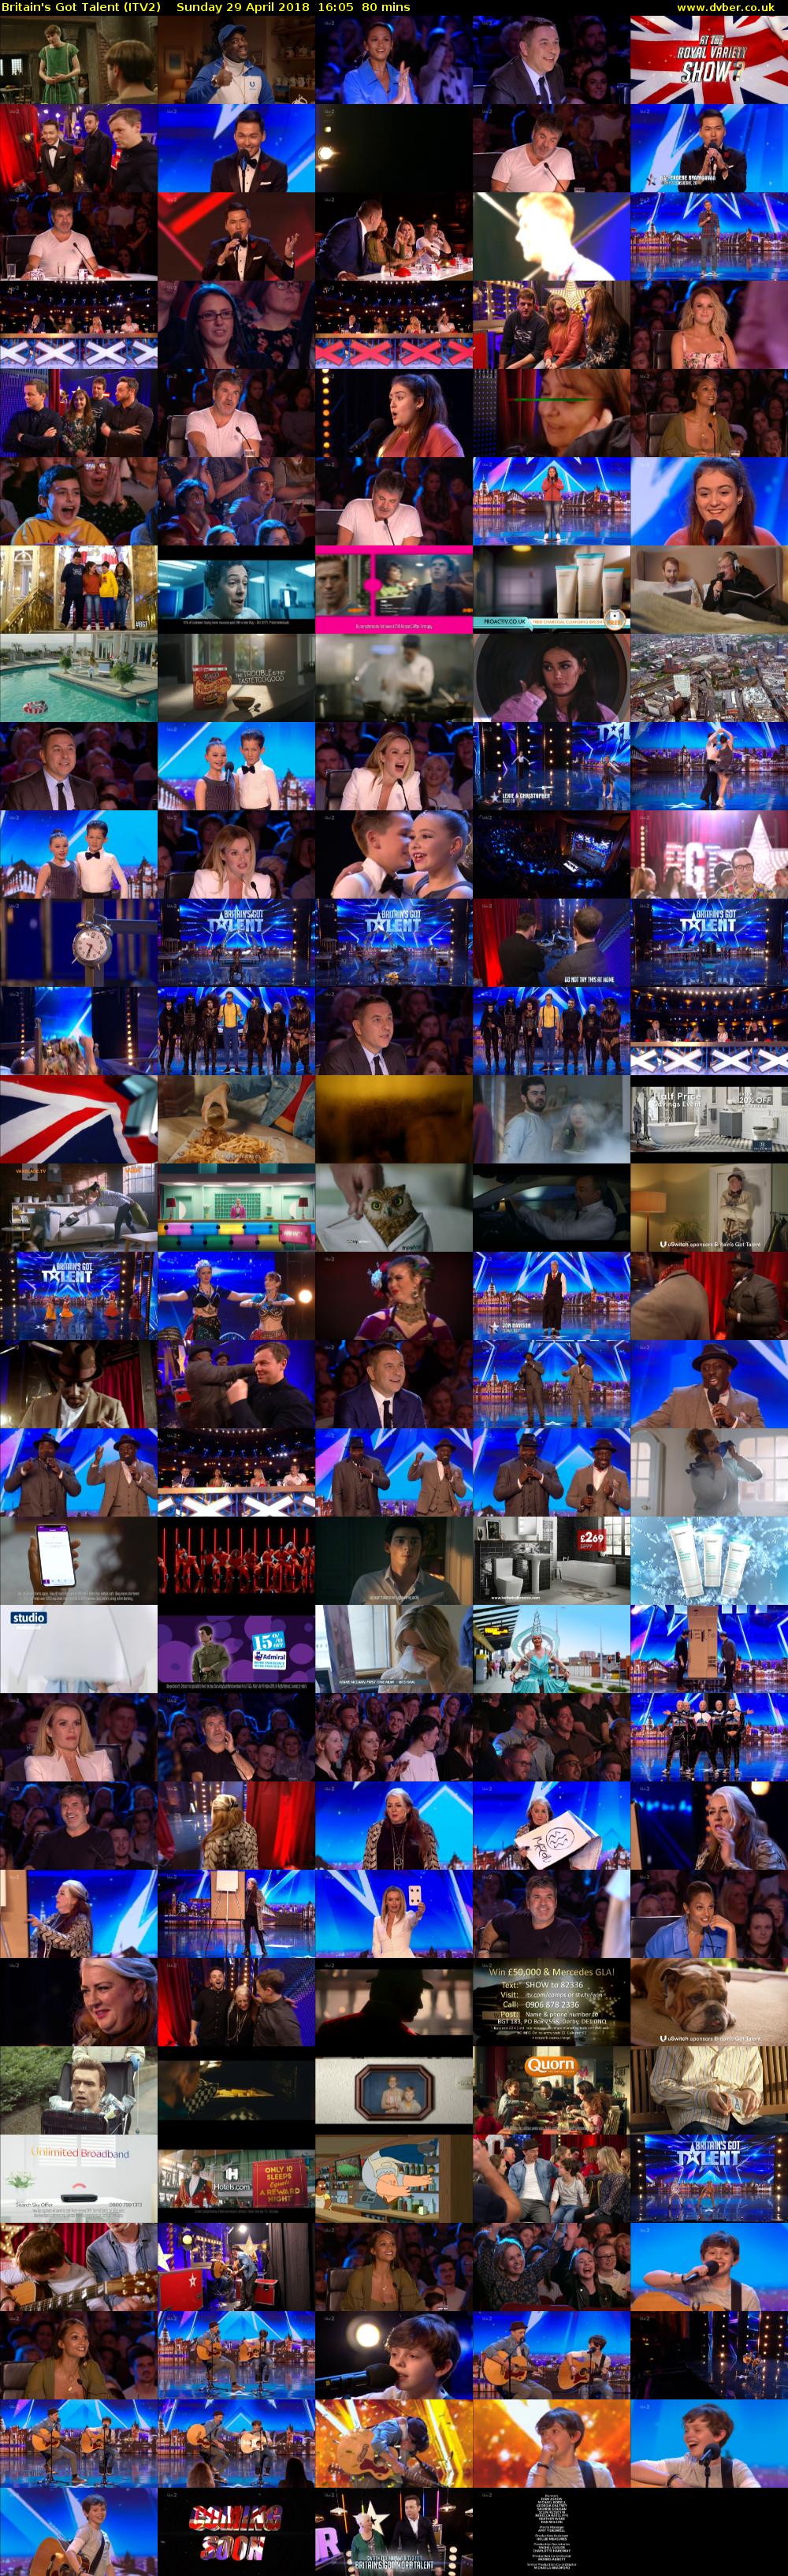 Britain's Got Talent (ITV2) Sunday 29 April 2018 16:05 - 17:25